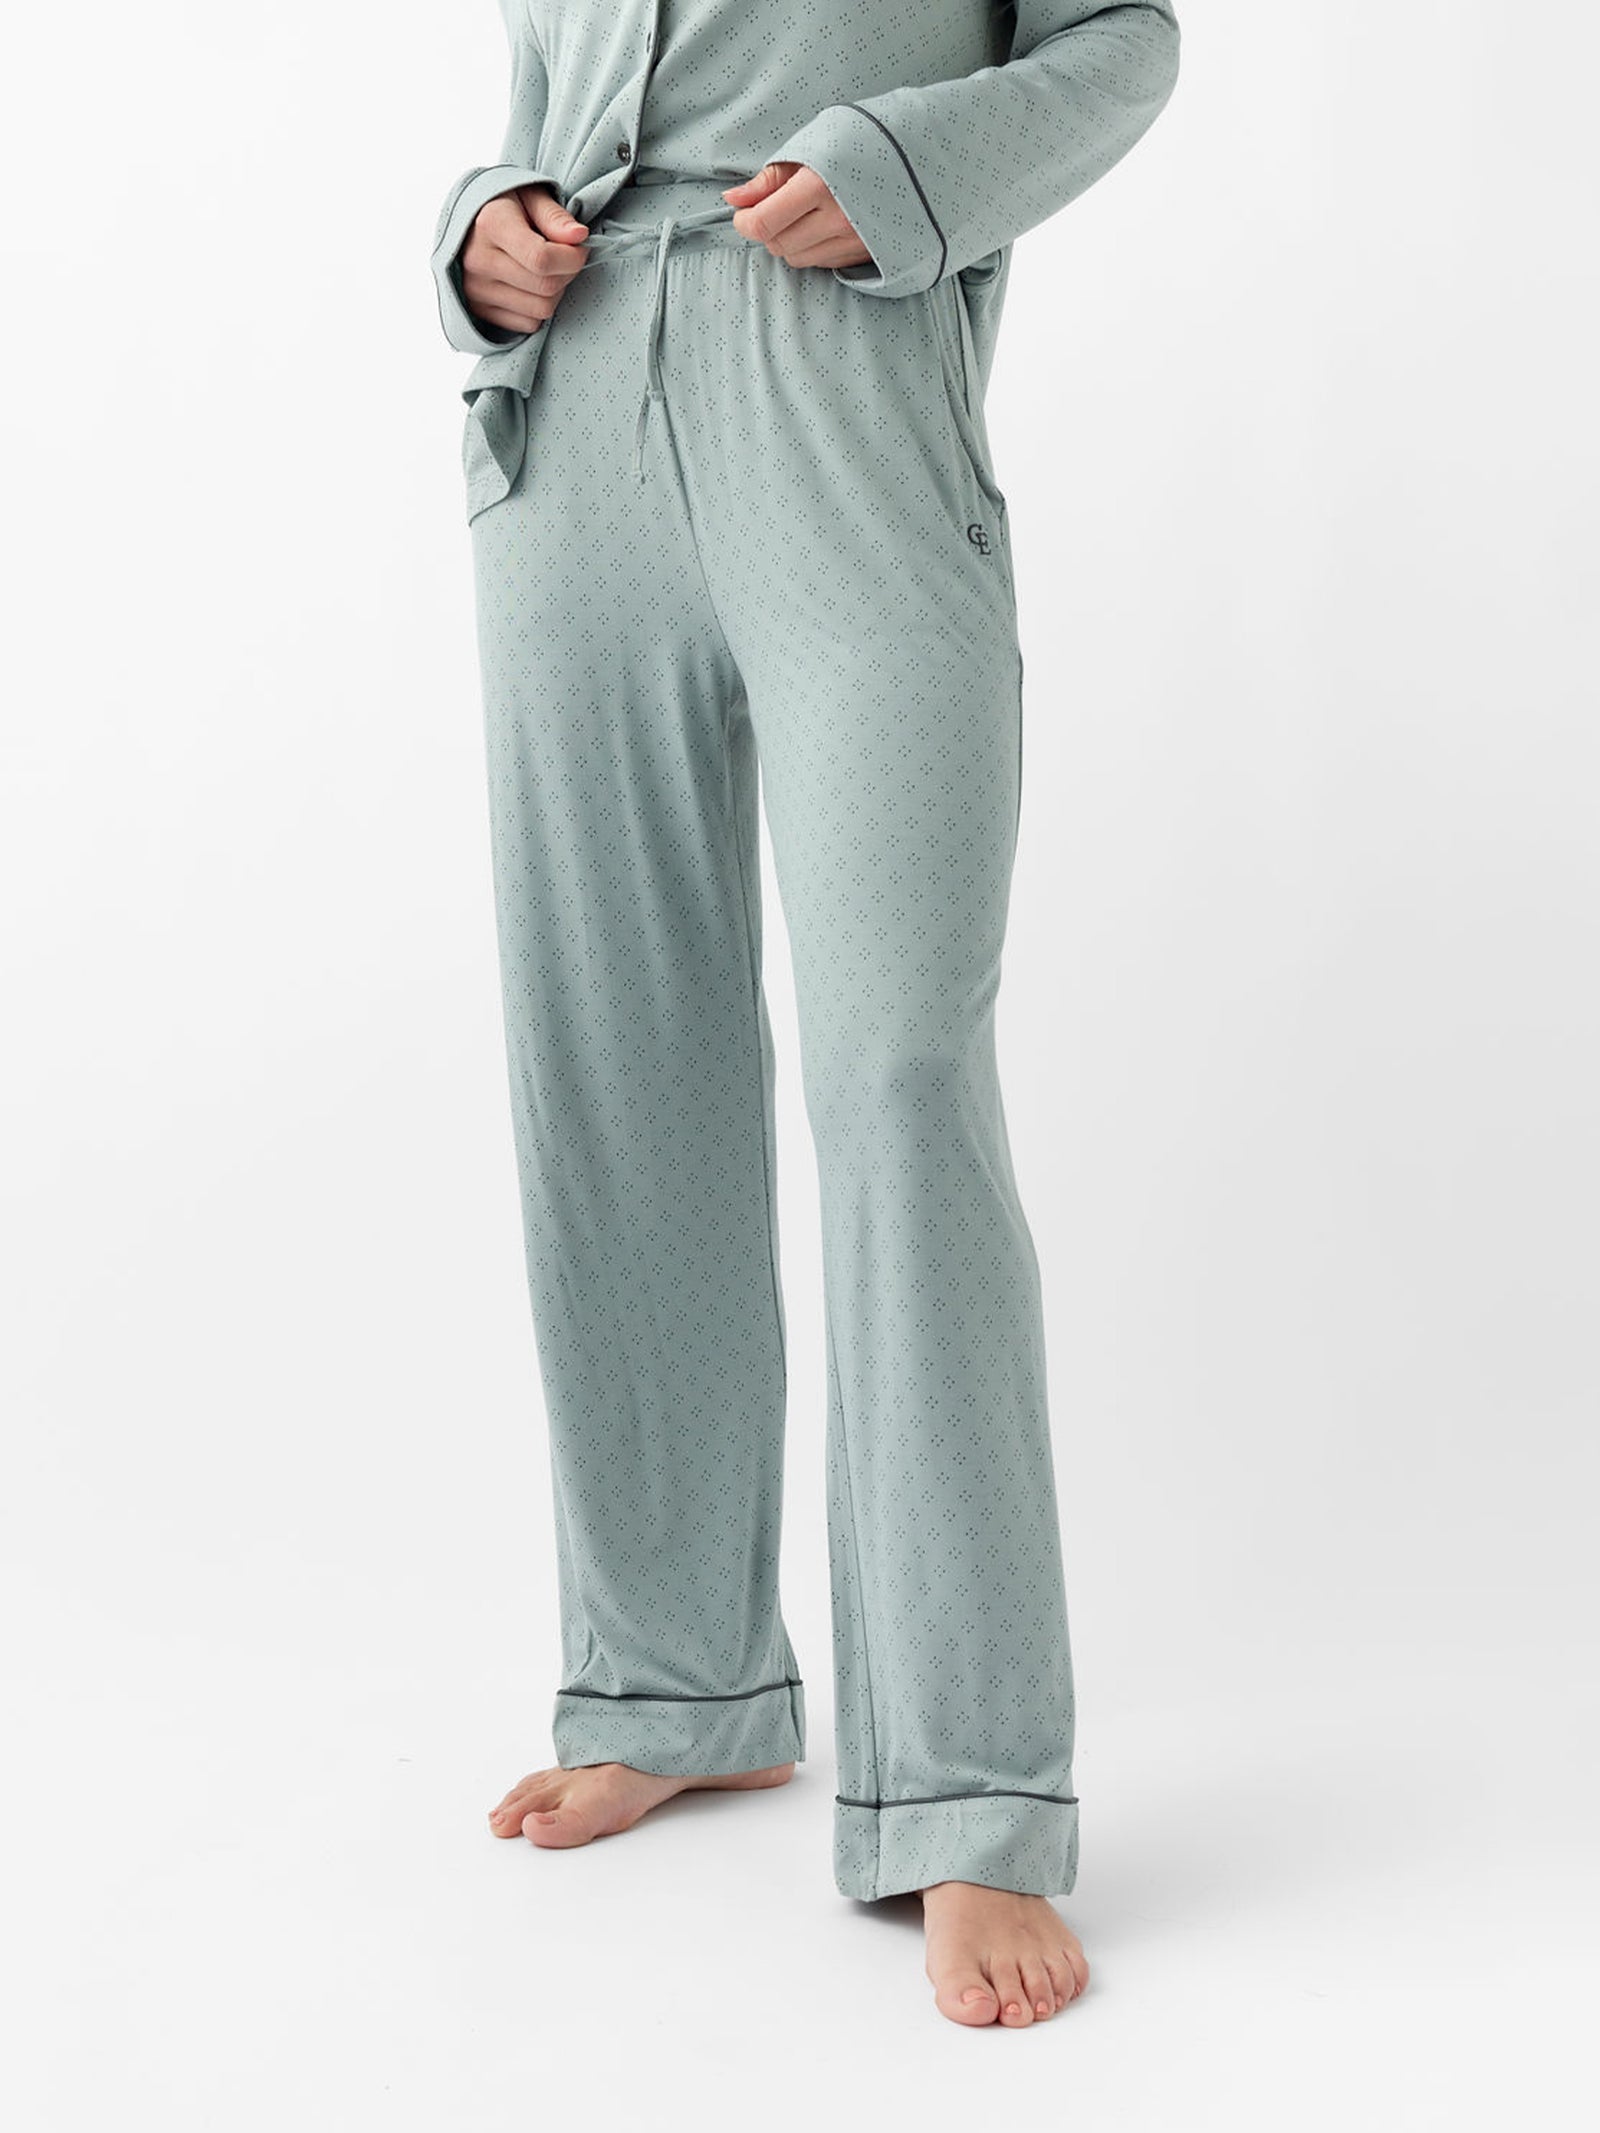 Woman wearing haze diamond dot pajamas pants with white background 